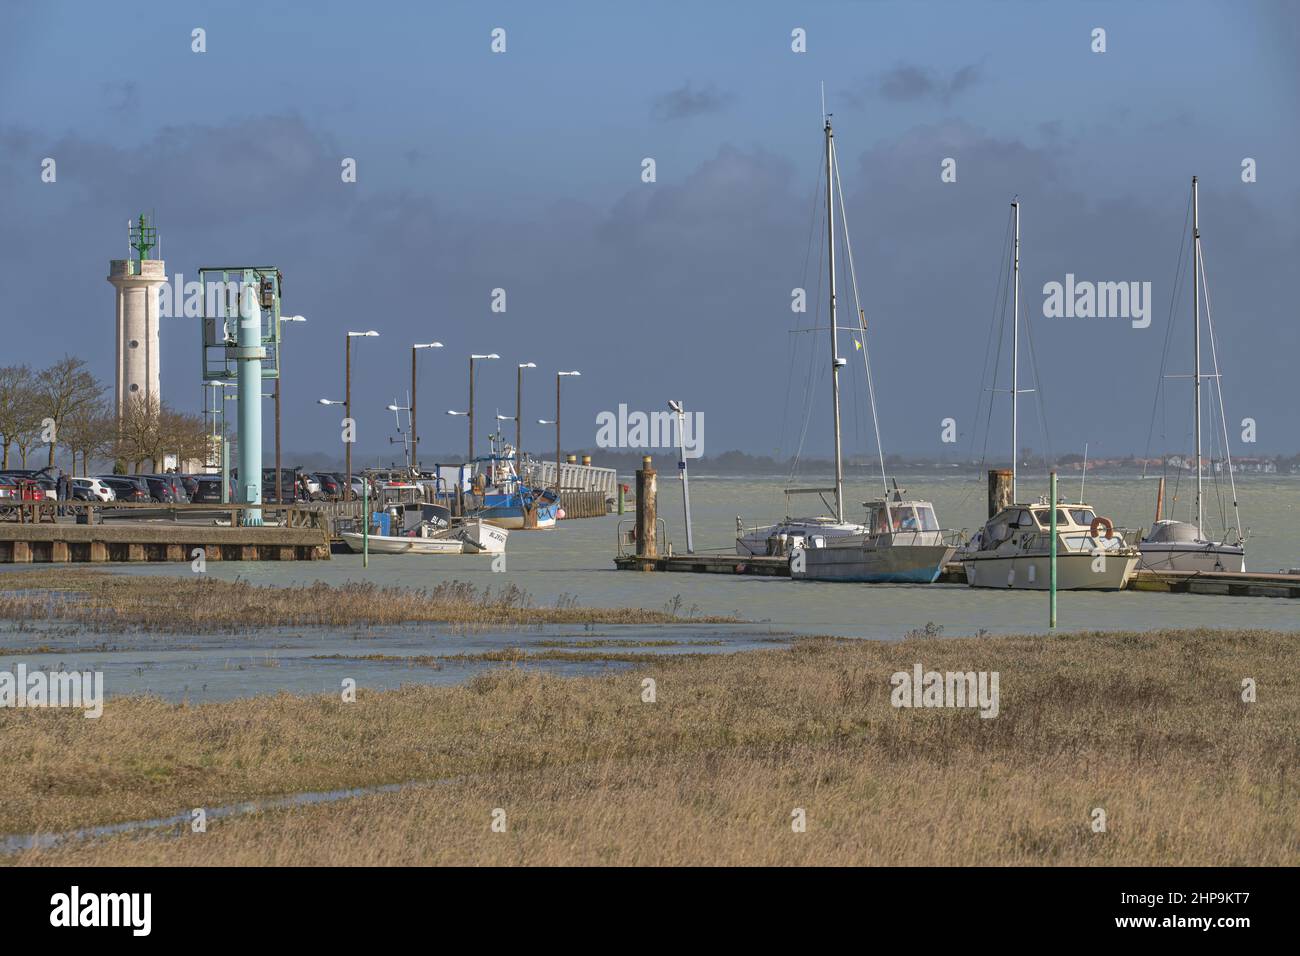 Bateau de pêche artisanale dans le Port du Hourdel en baie de Somme Stockfoto